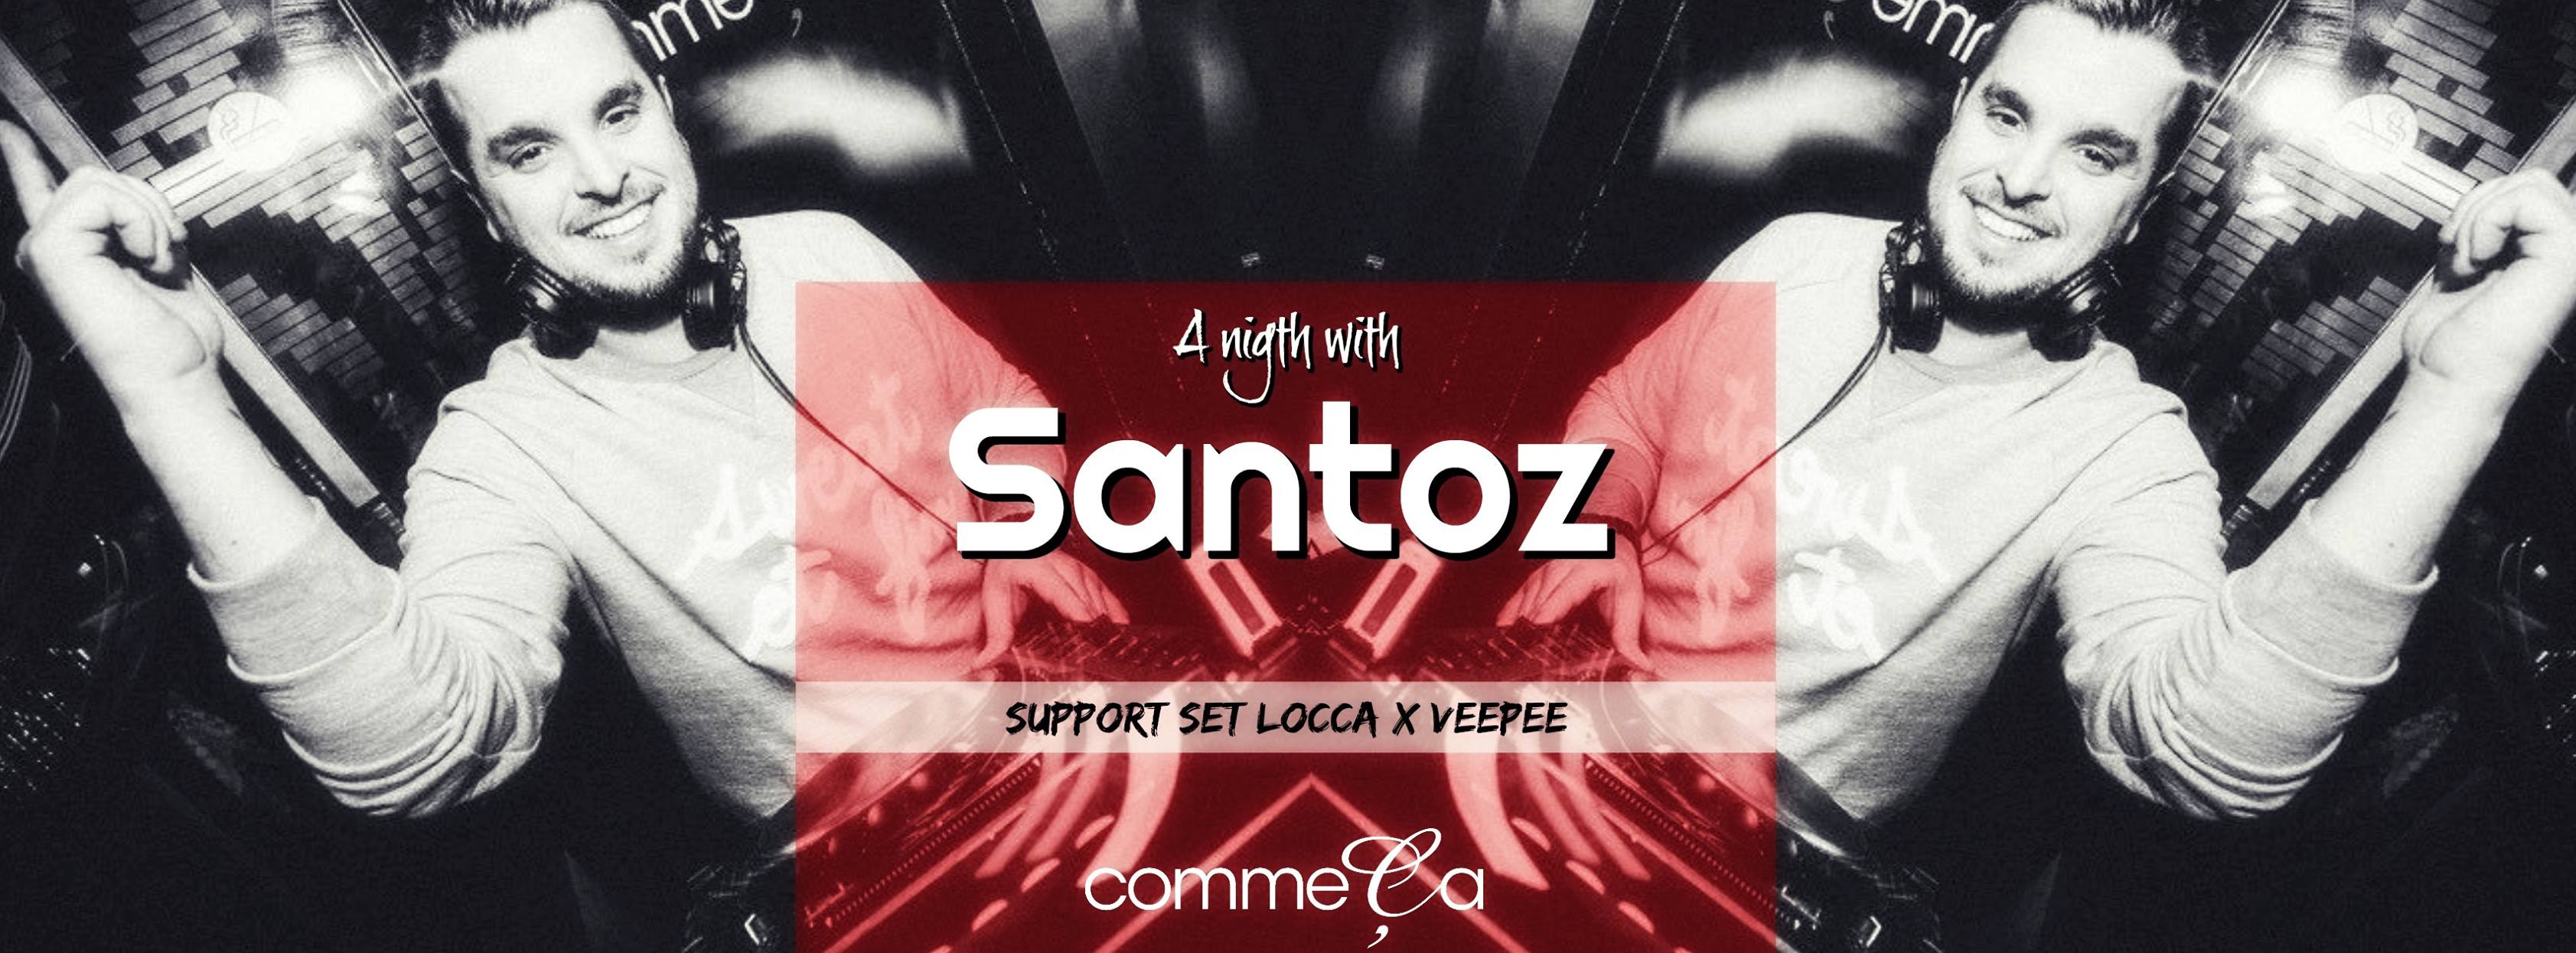 18 11 29 A Night with Santoz Comme Ca Zaterdag 1 december 2018